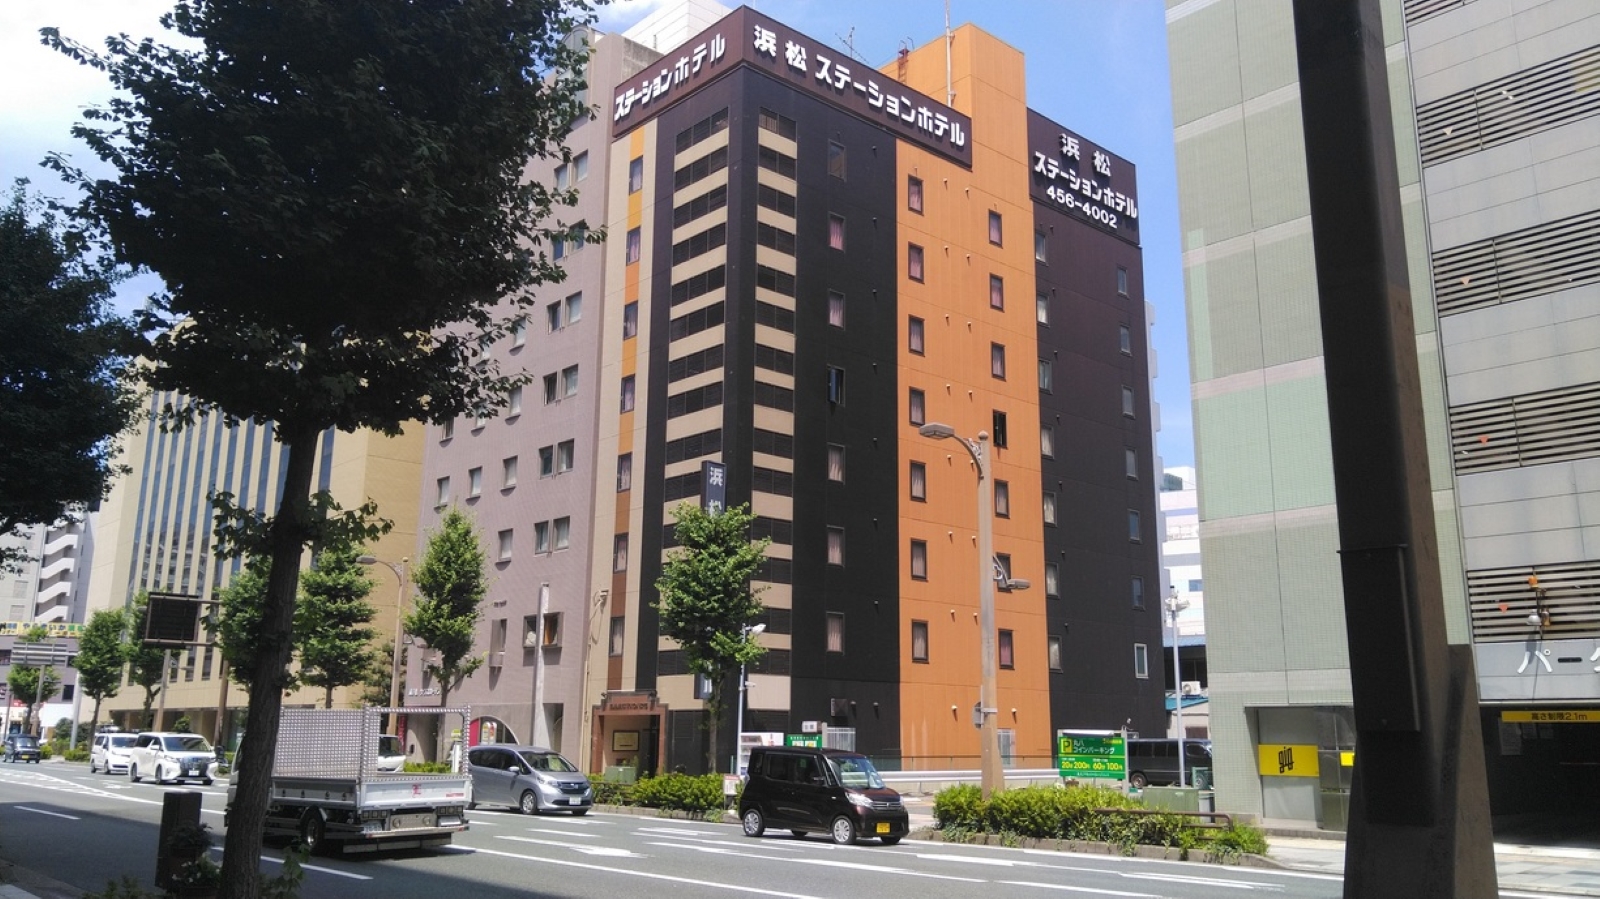 Hamamatsu Station Hotel (Kuretake Hotel Chain)